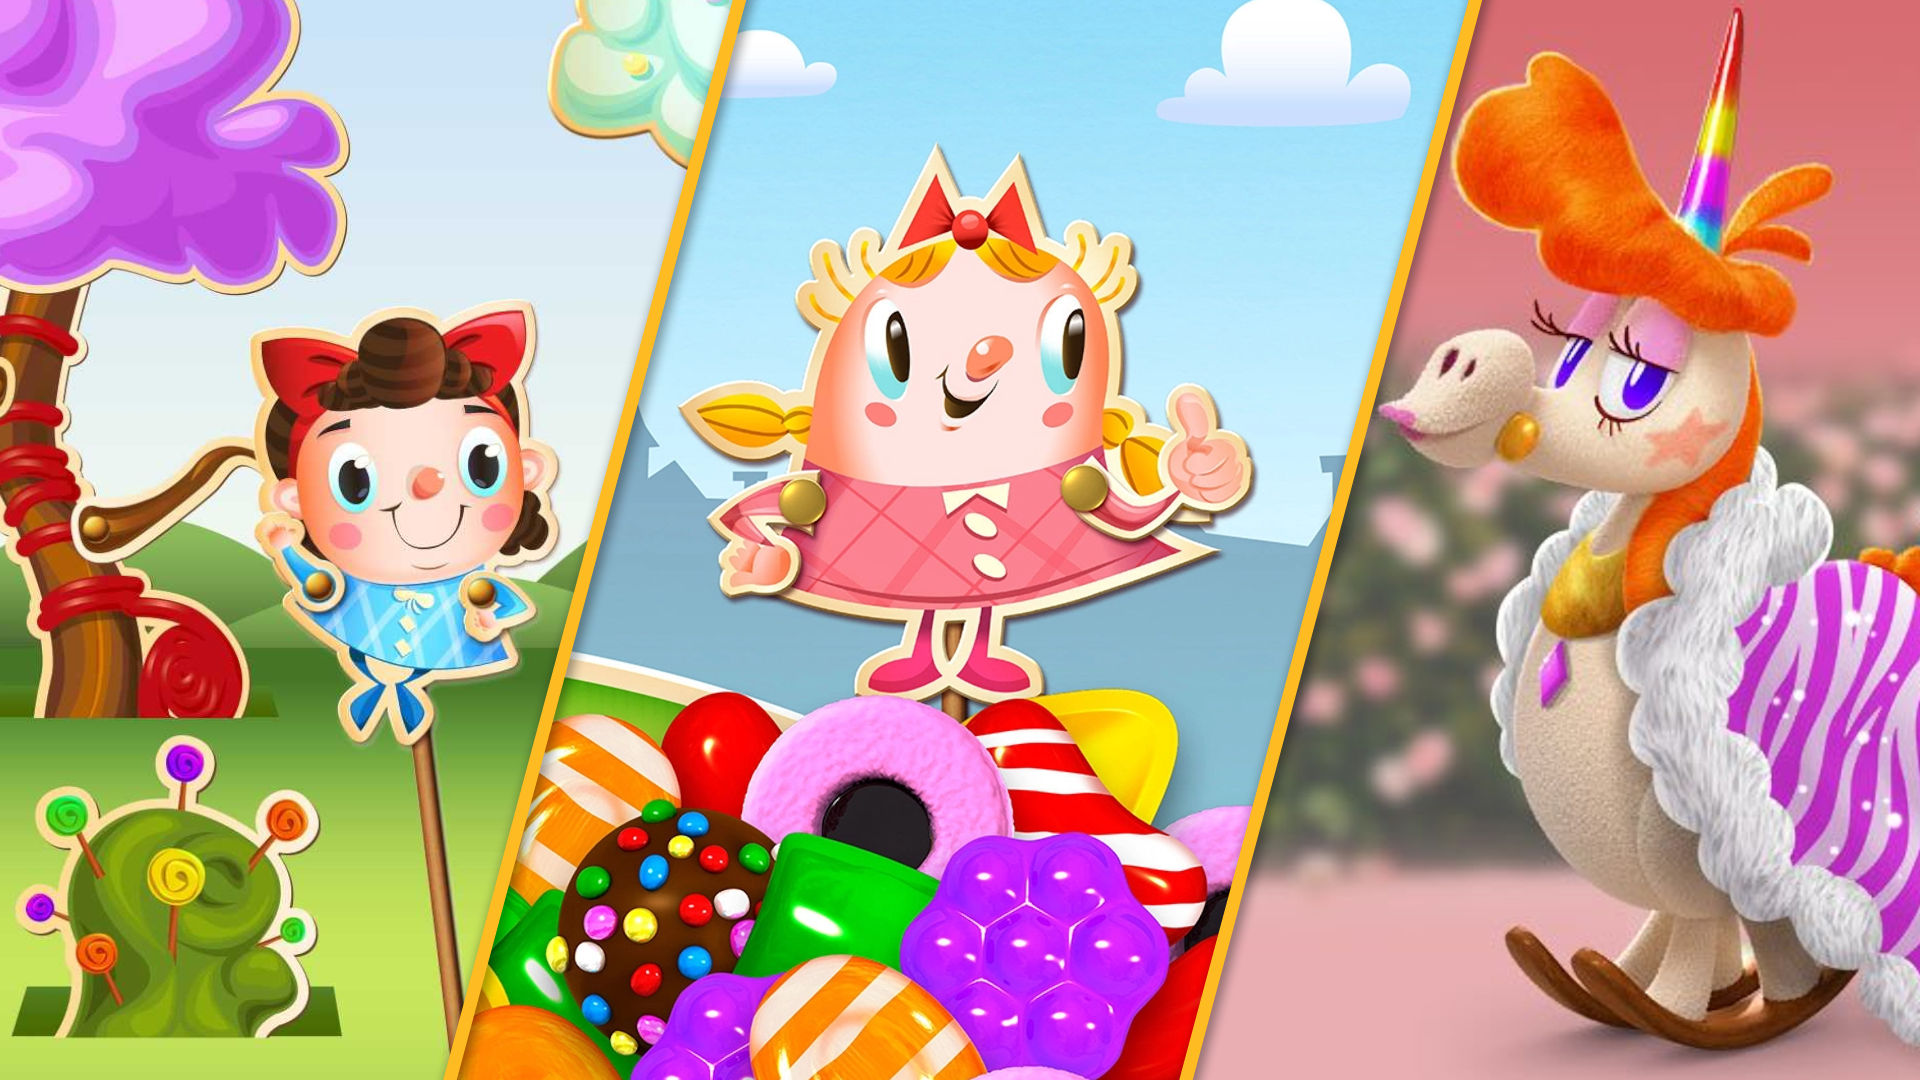 Candy Crush Jelly Saga - Free Casual Games!